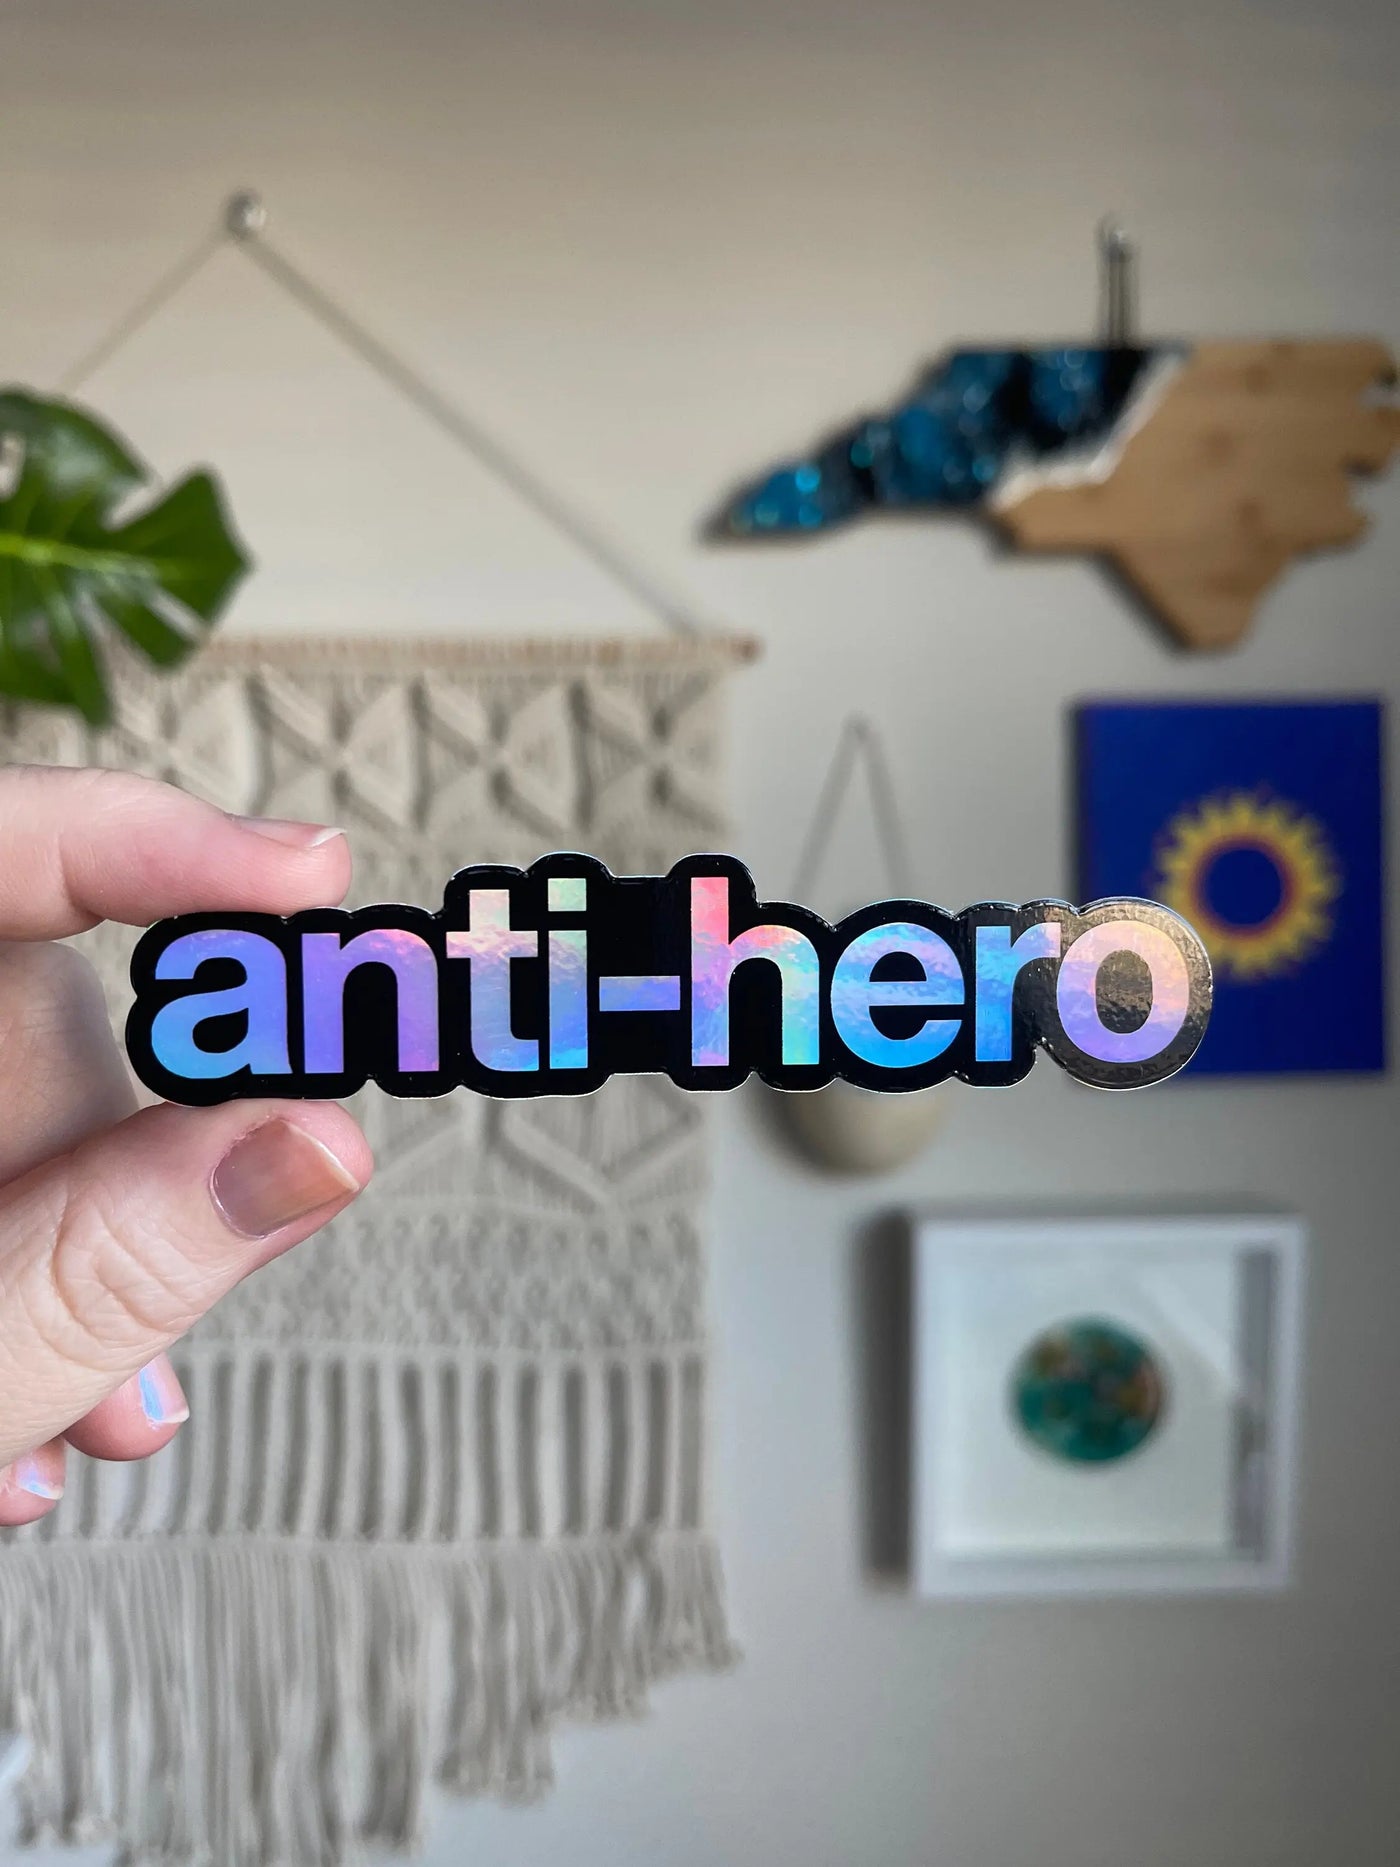 Anti-Hero holographic sticker MangoIllustrated